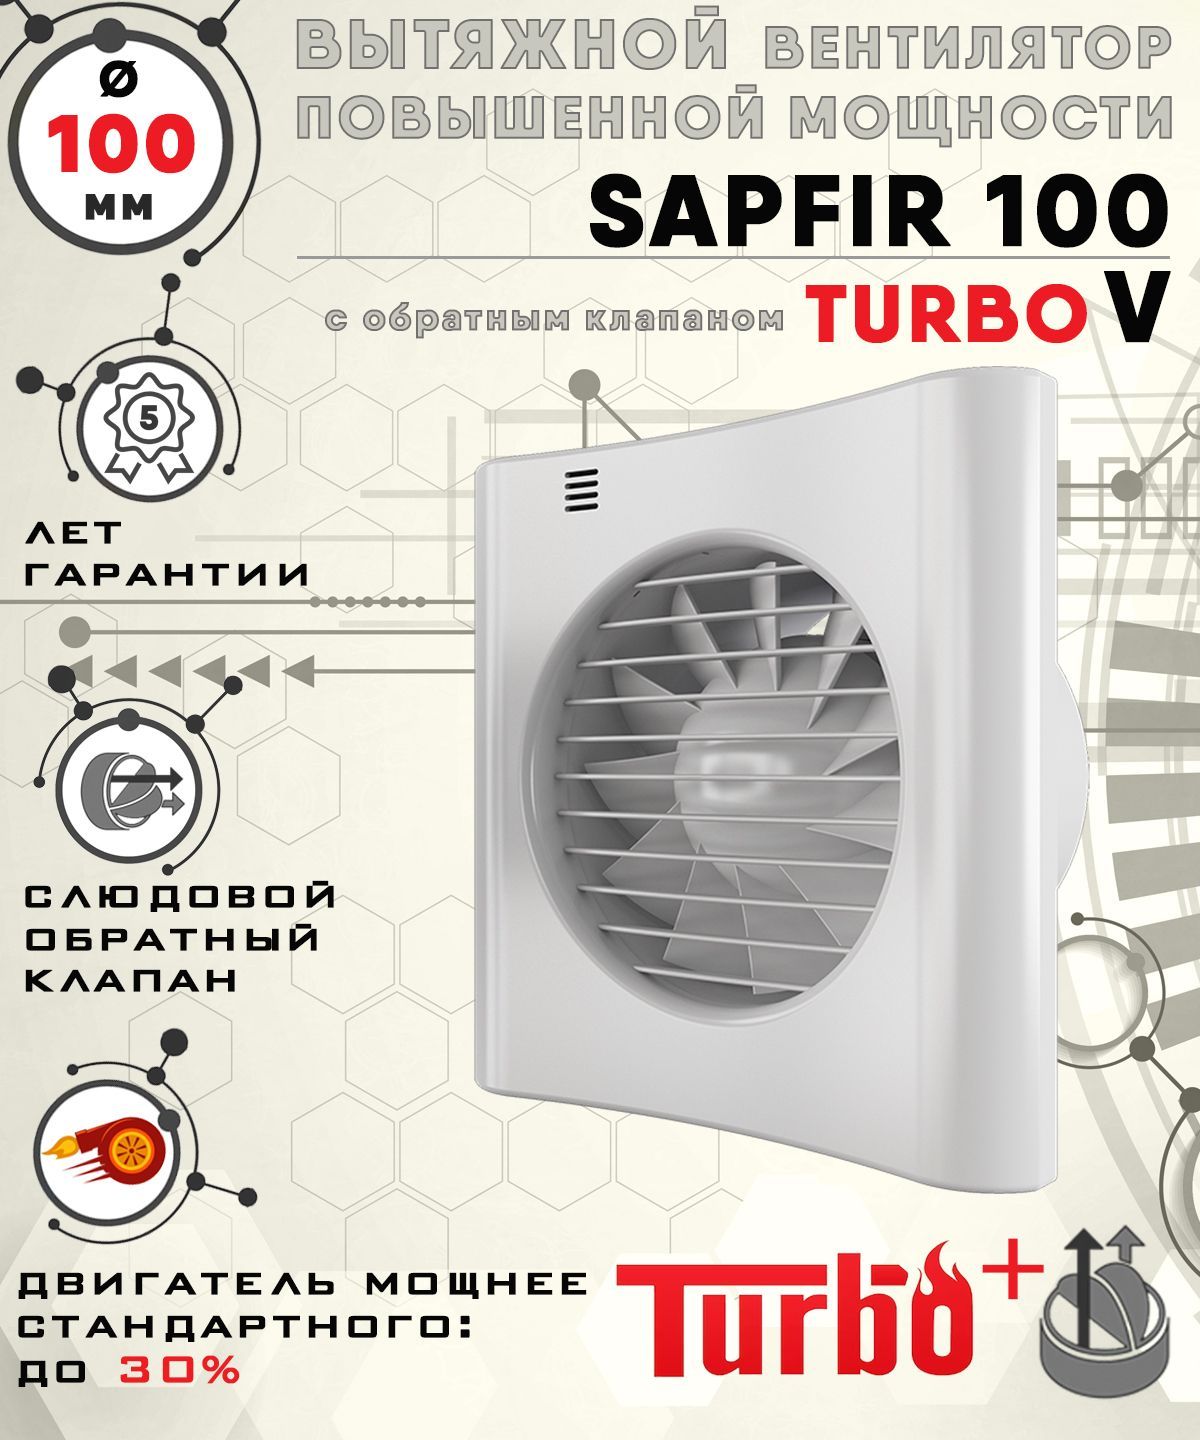 SAPFIR 100 TURBO V вентилятор вытяжной диаметр 100 мм ZERNBERG